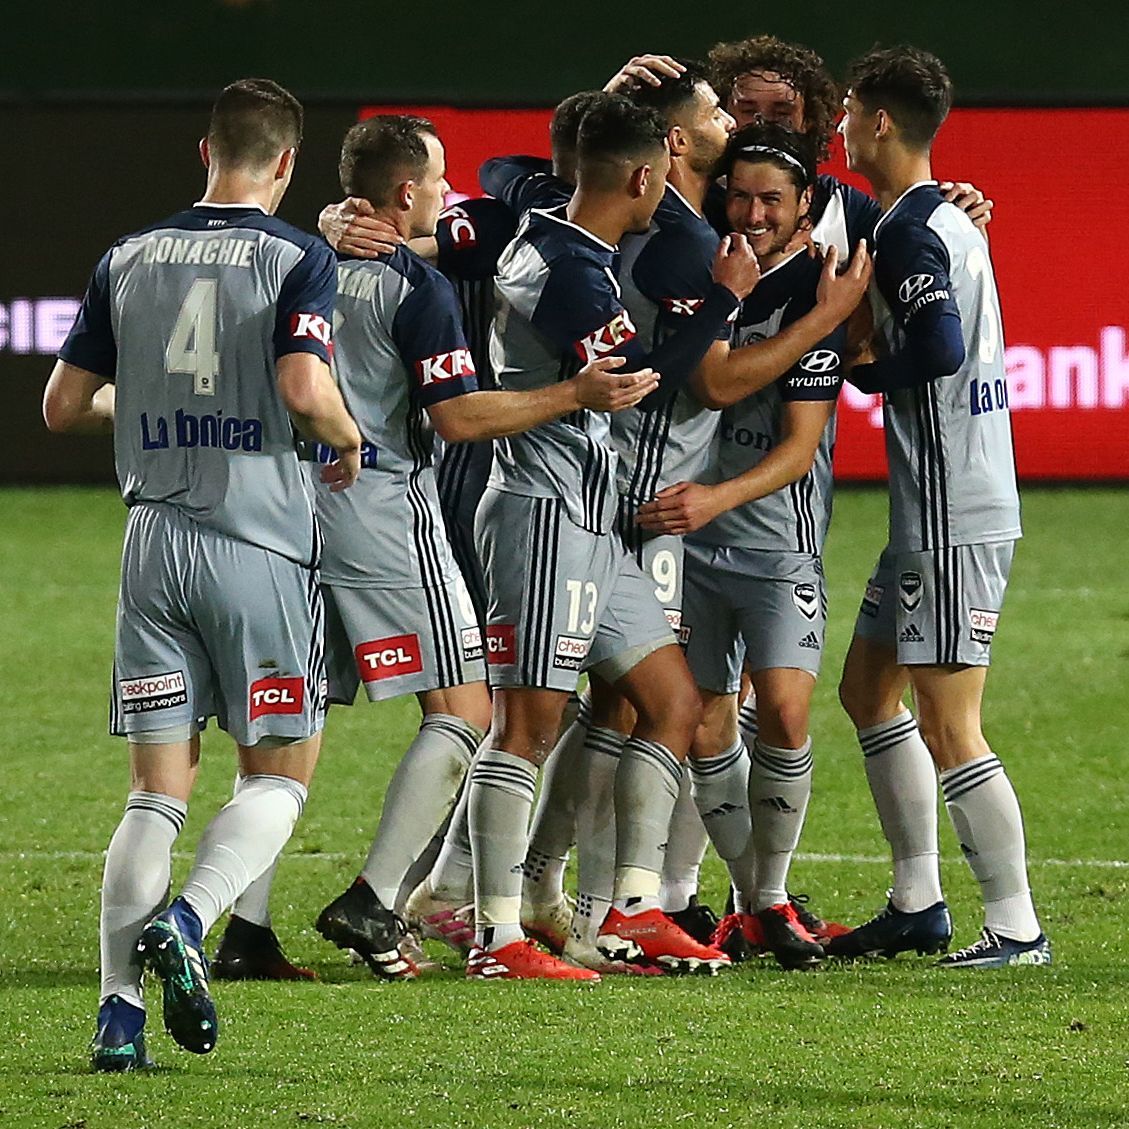 Melbourne Victory 4-0 Western Sydney Wanderers (Dec 1, 2018) Game